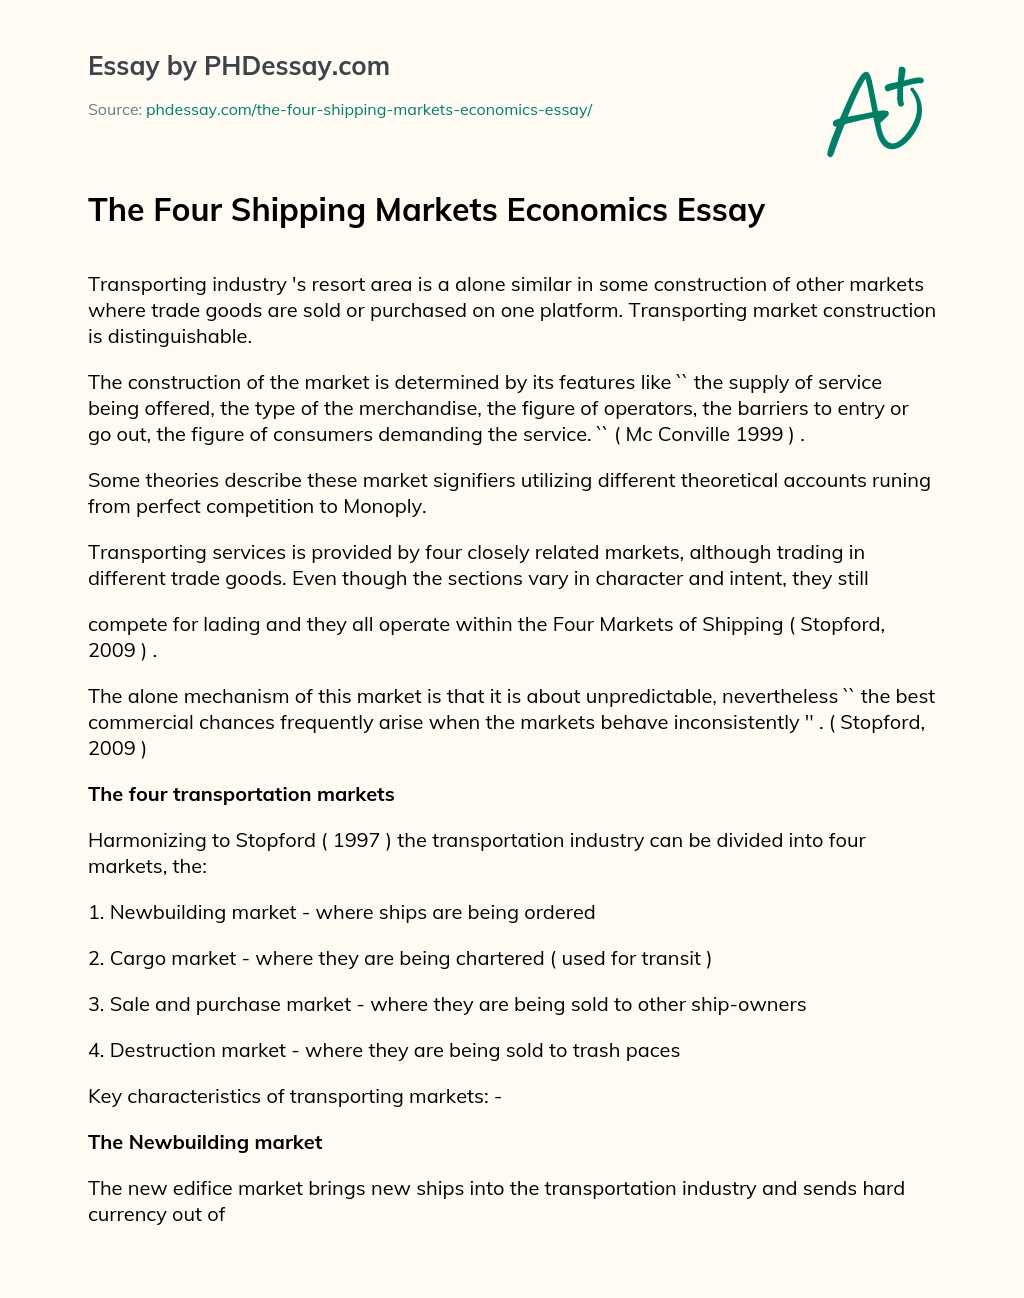 The Four Shipping Markets Economics Essay essay